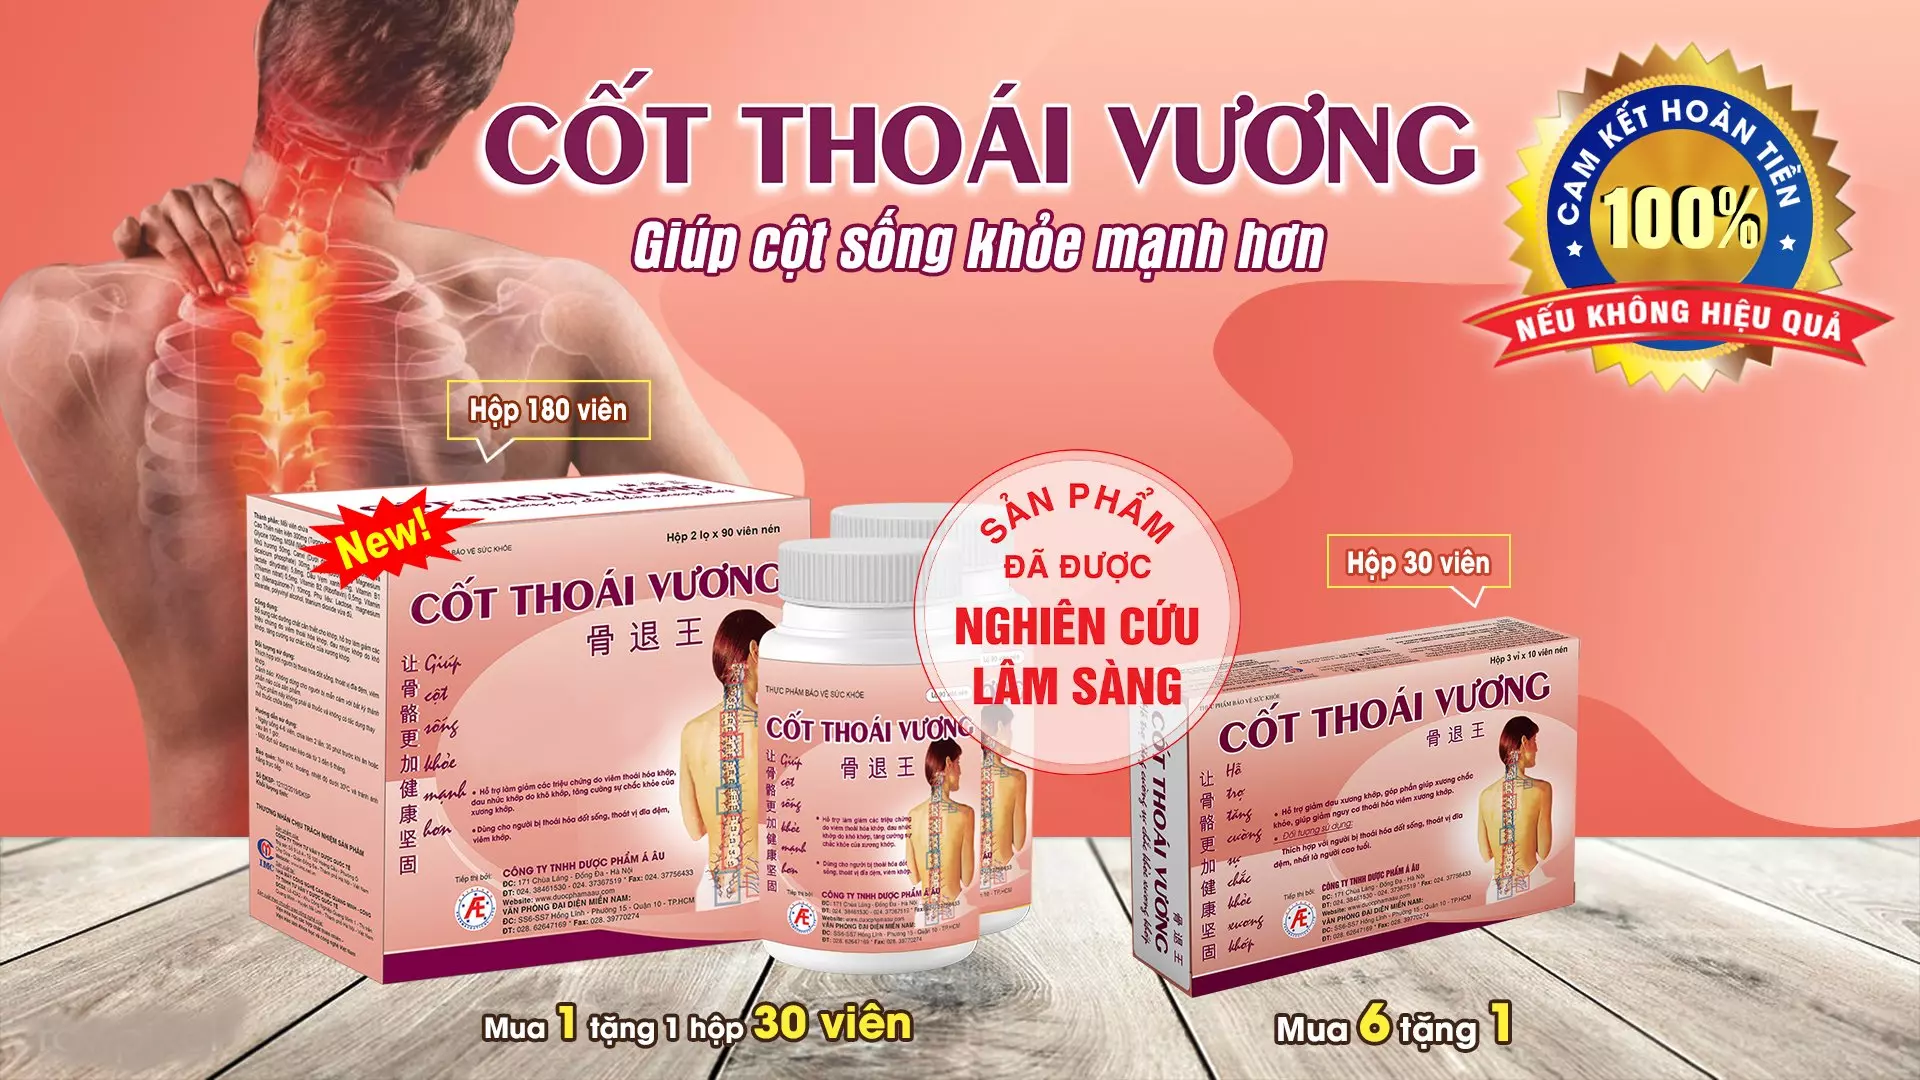 Cot-Thoai-Vuong-giup-ho-tro-dieu-tri-gai-cot-song-hieu-qua